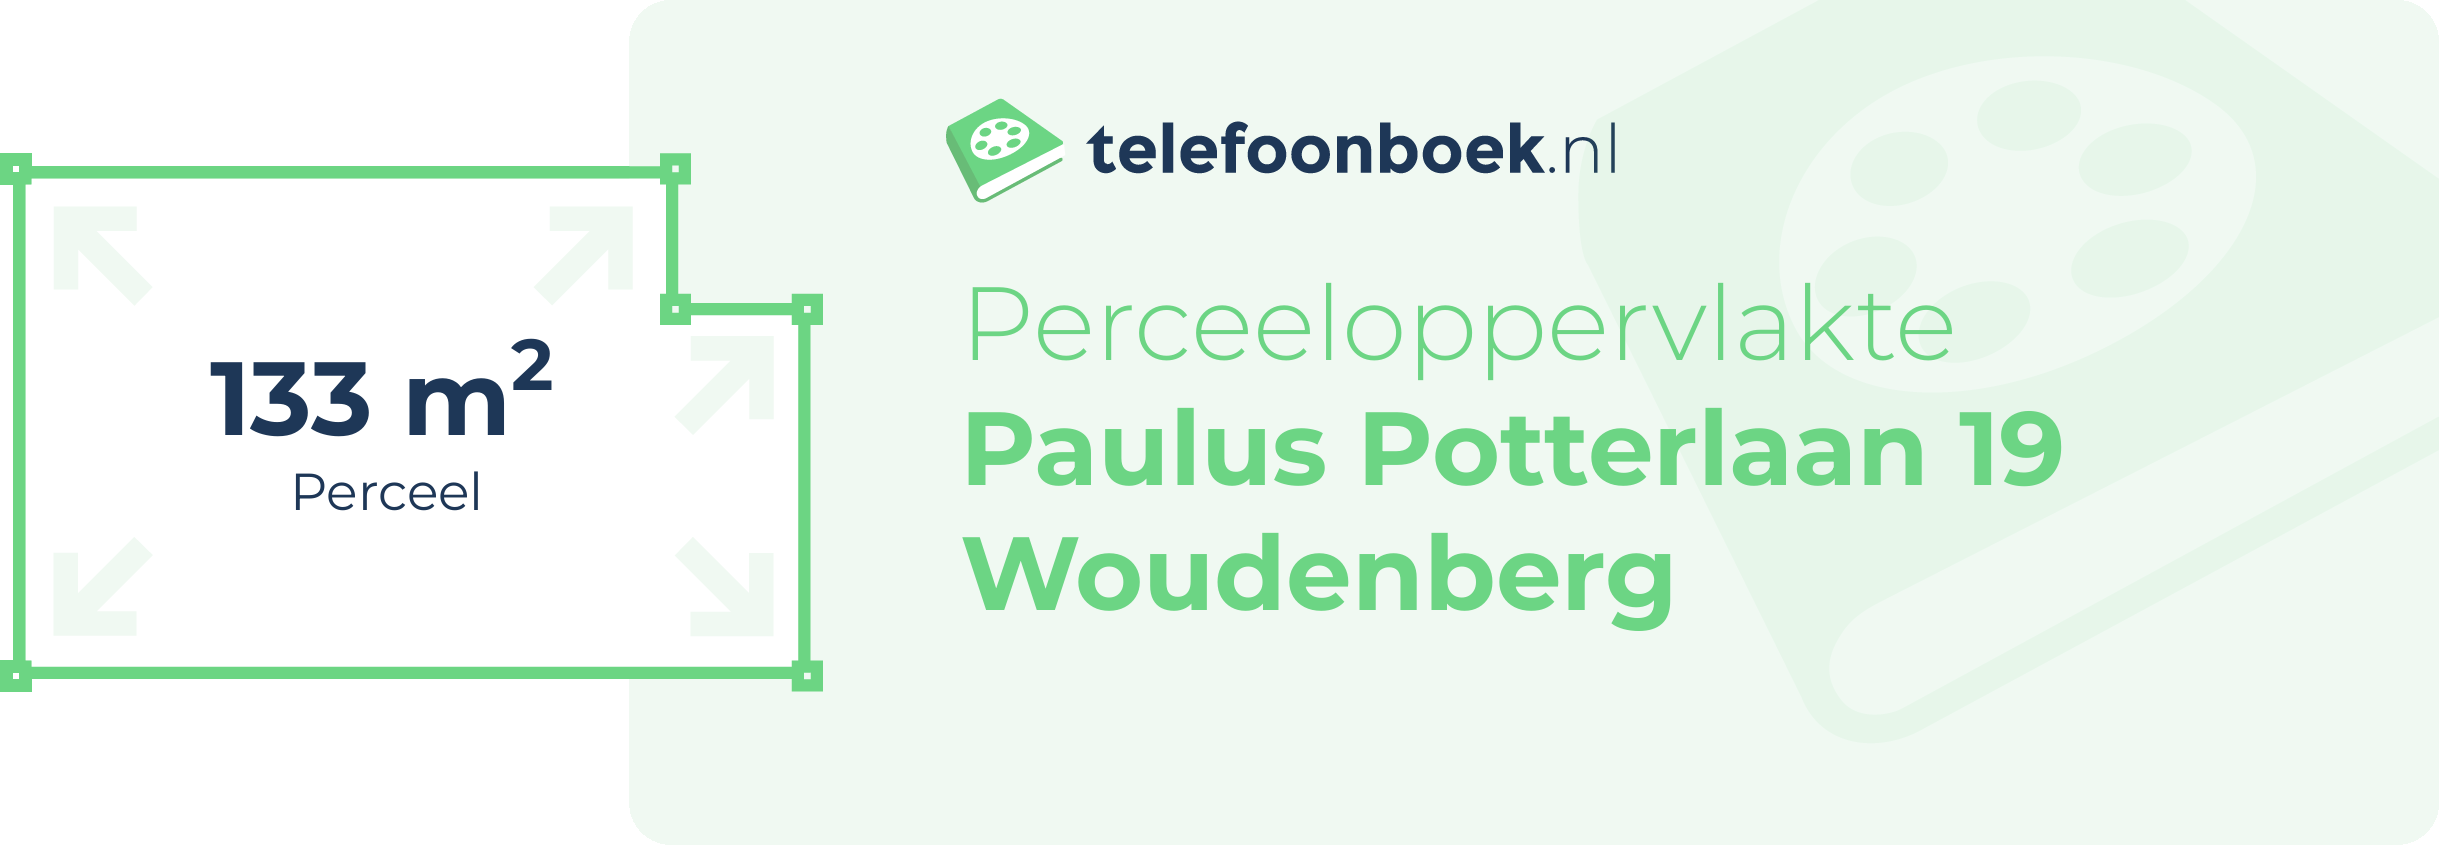 Perceeloppervlakte Paulus Potterlaan 19 Woudenberg